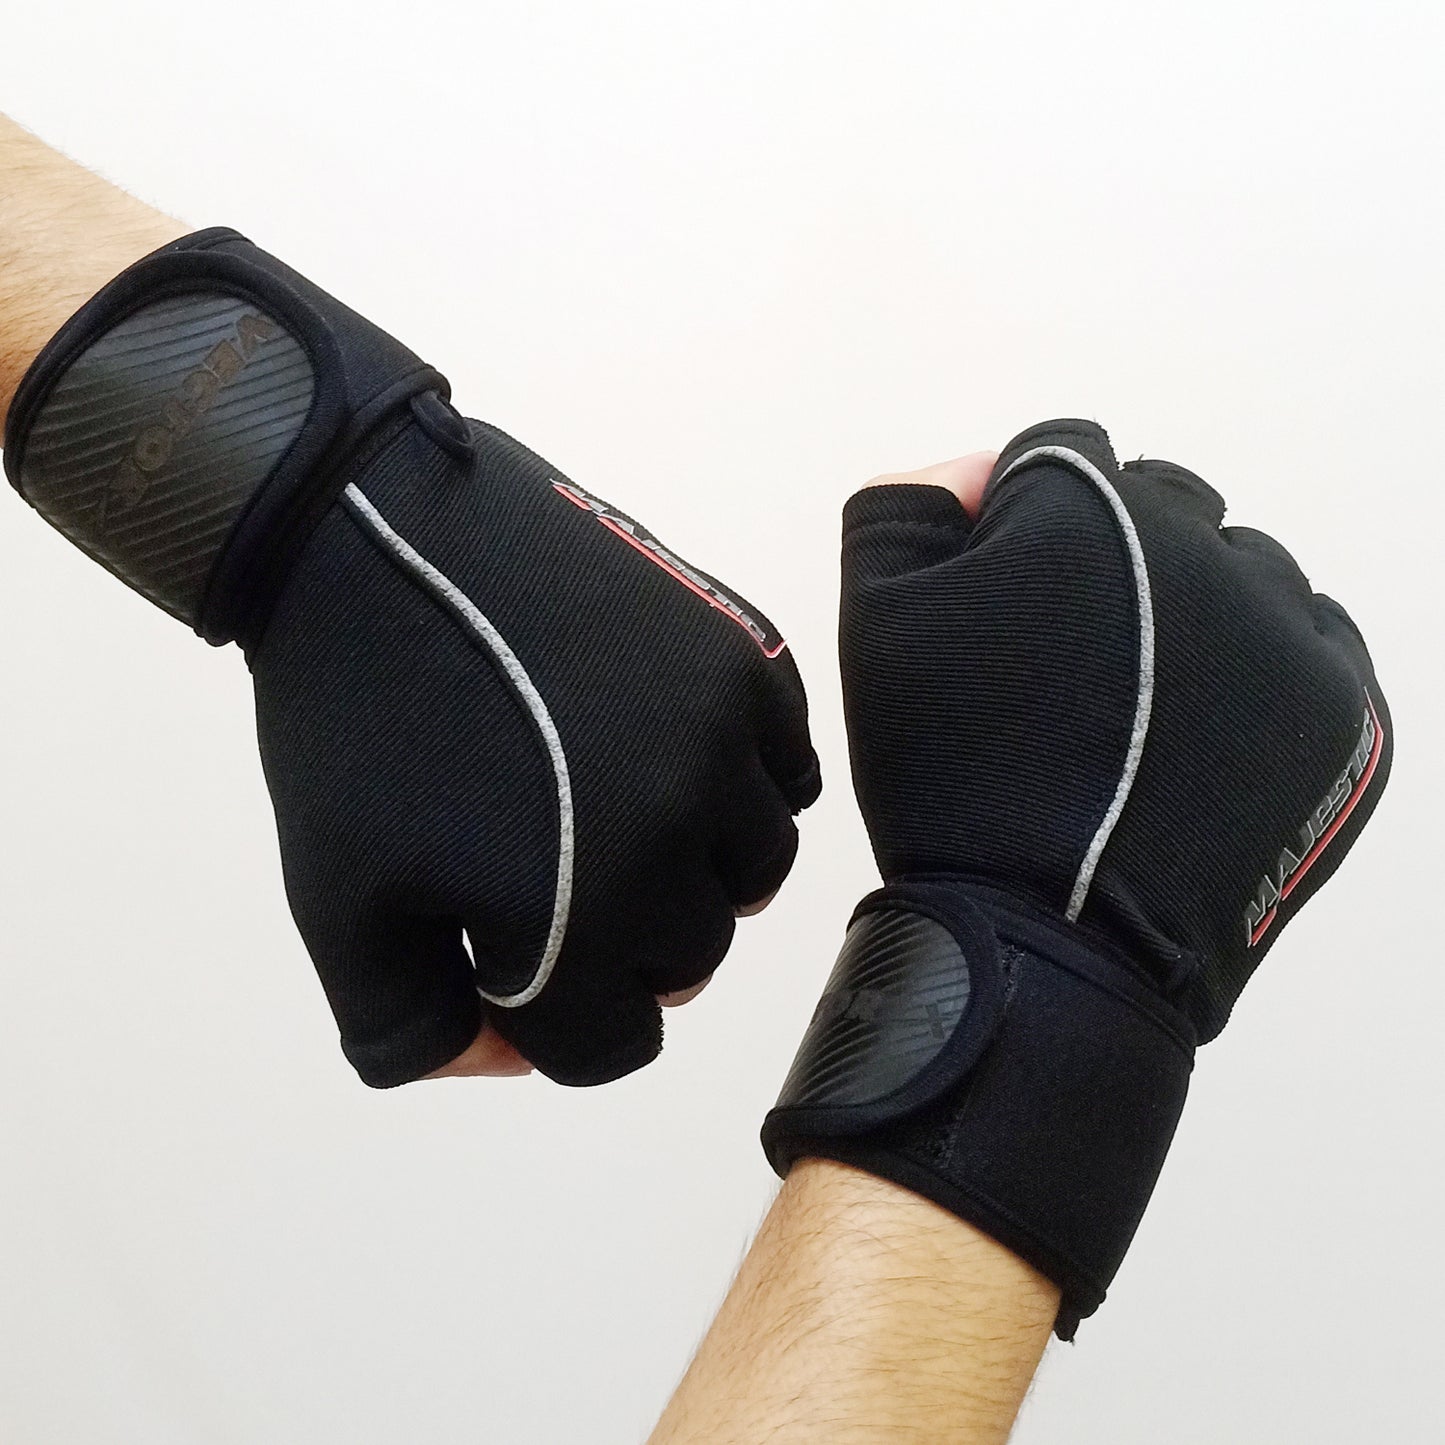 Vector X VX-Majestic Fitness Gloves - Best Price online Prokicksports.com